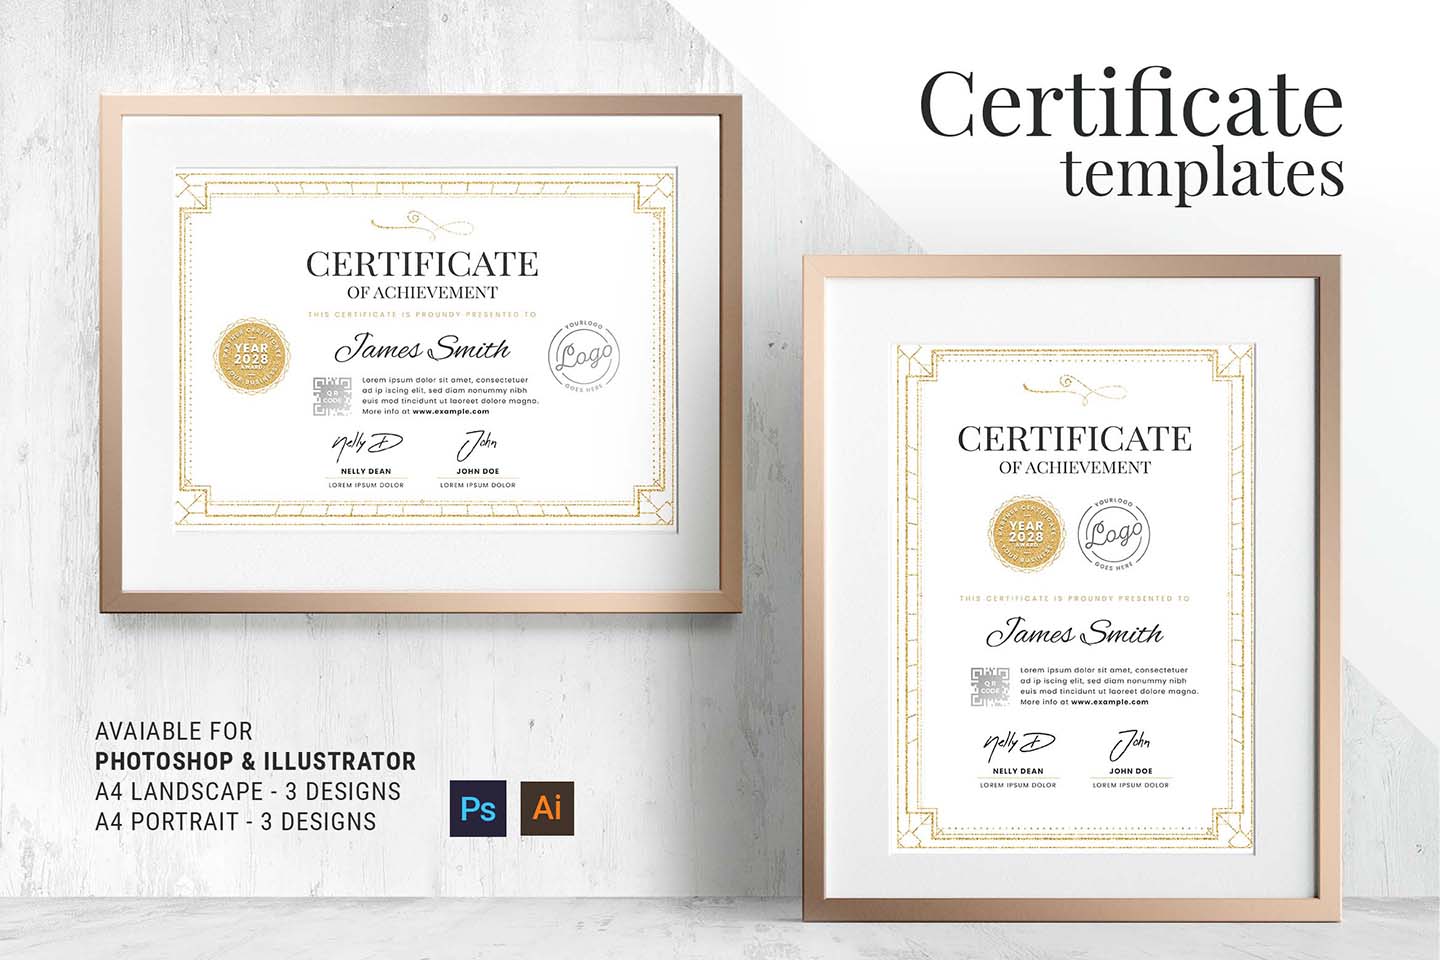 blank certificates templates